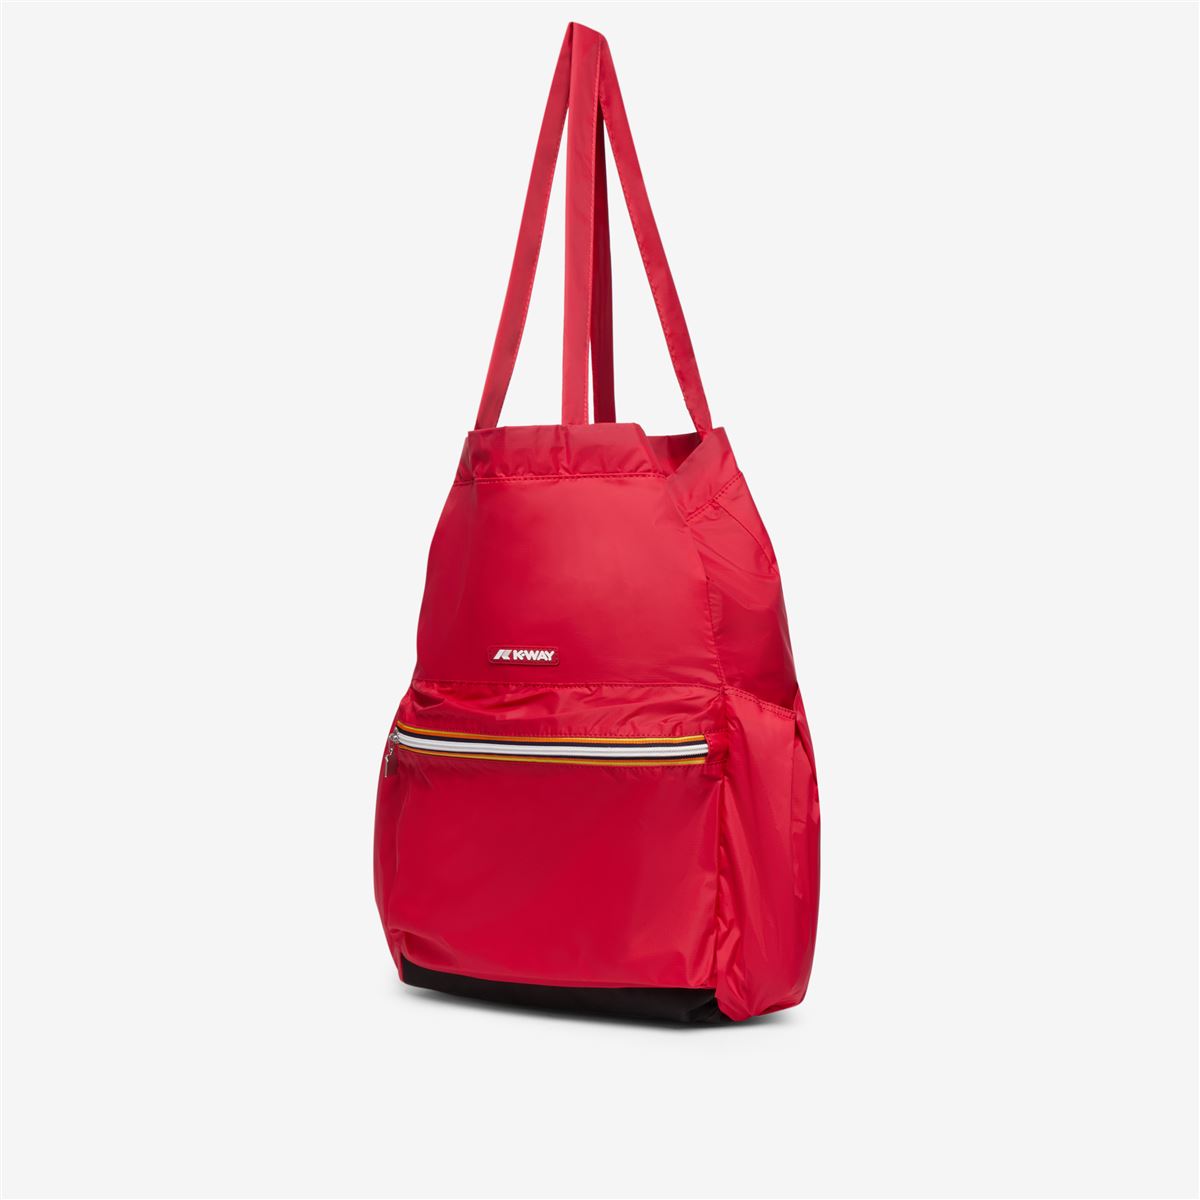 BLANDY - Bag - Nylon - Unisex - Red Berry